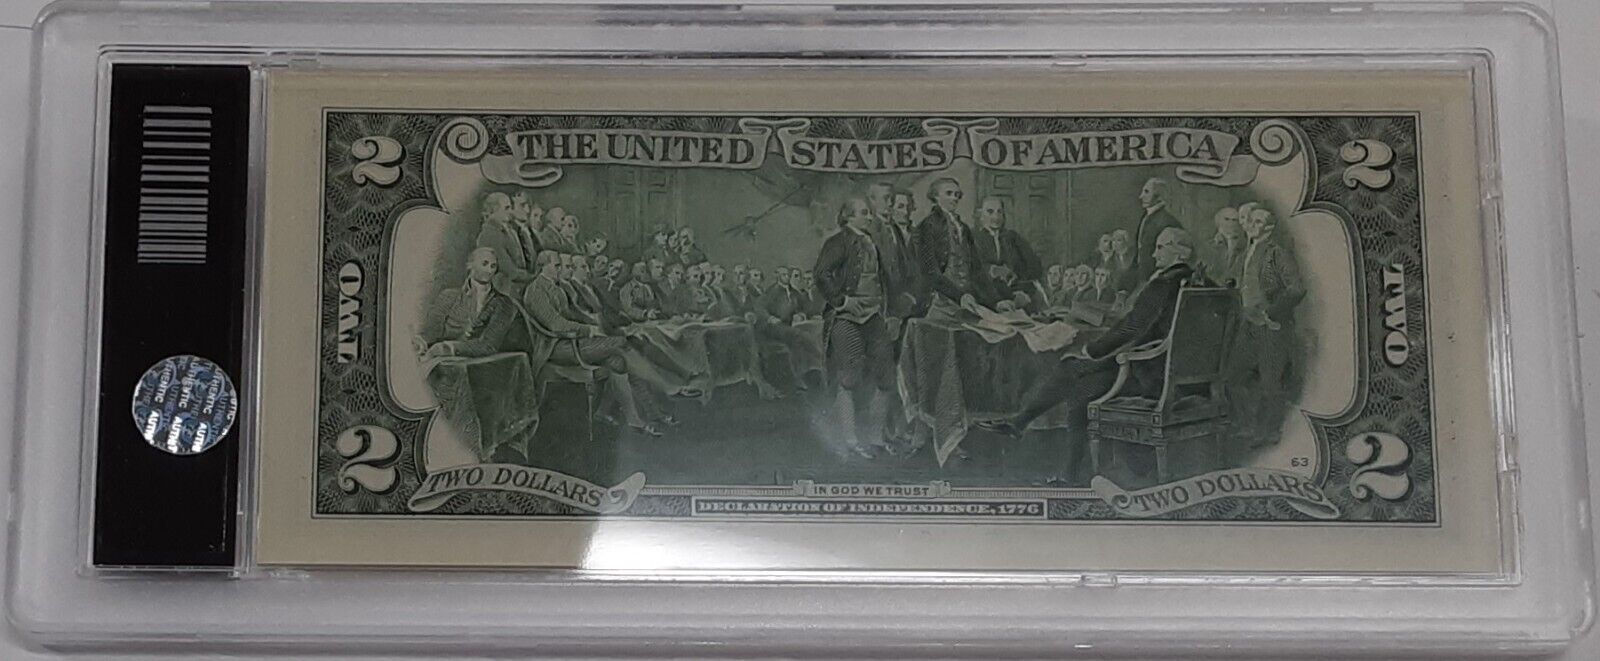 CU Colorized $2 FRN - President John Quincy Adams in Plastic Case